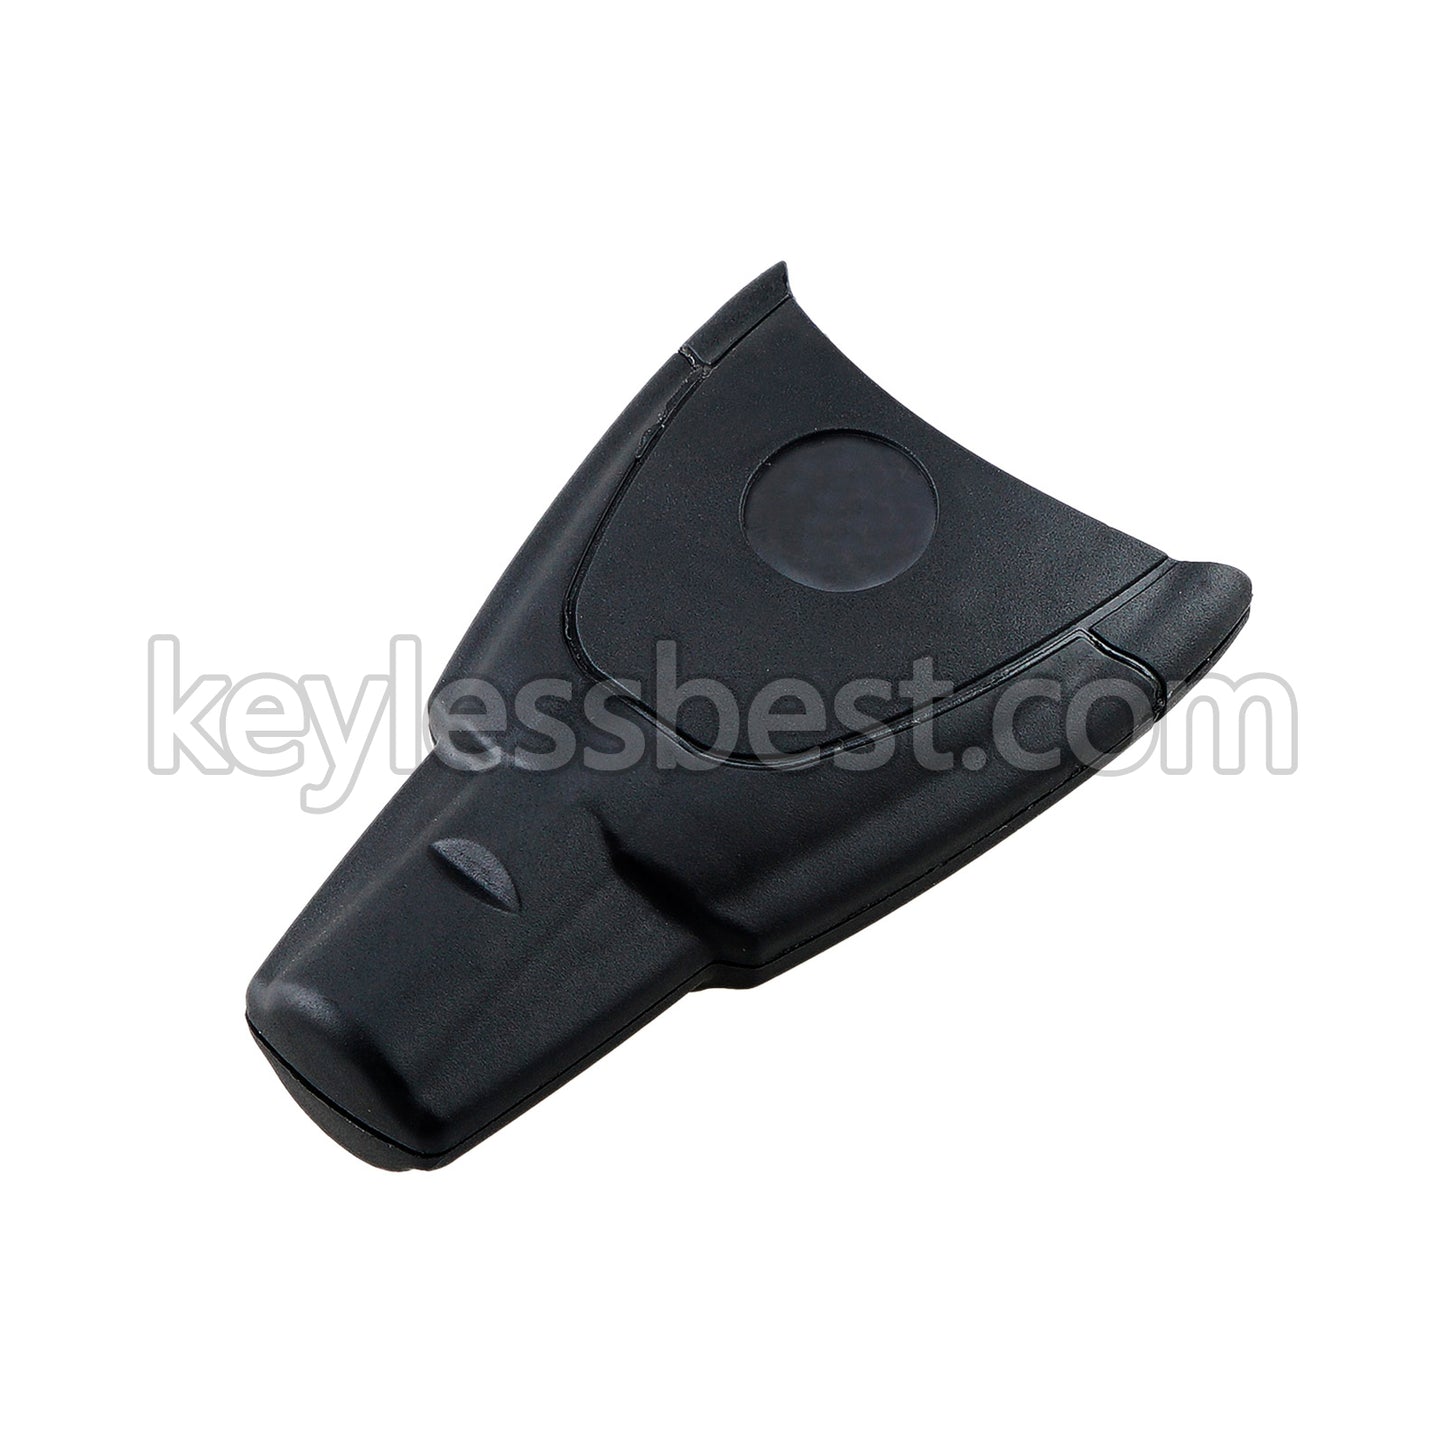 2003-2011 Saab 9-3 9-5 / 4 Buttons Remote Key / LTQSAAM433TX / 433MHz